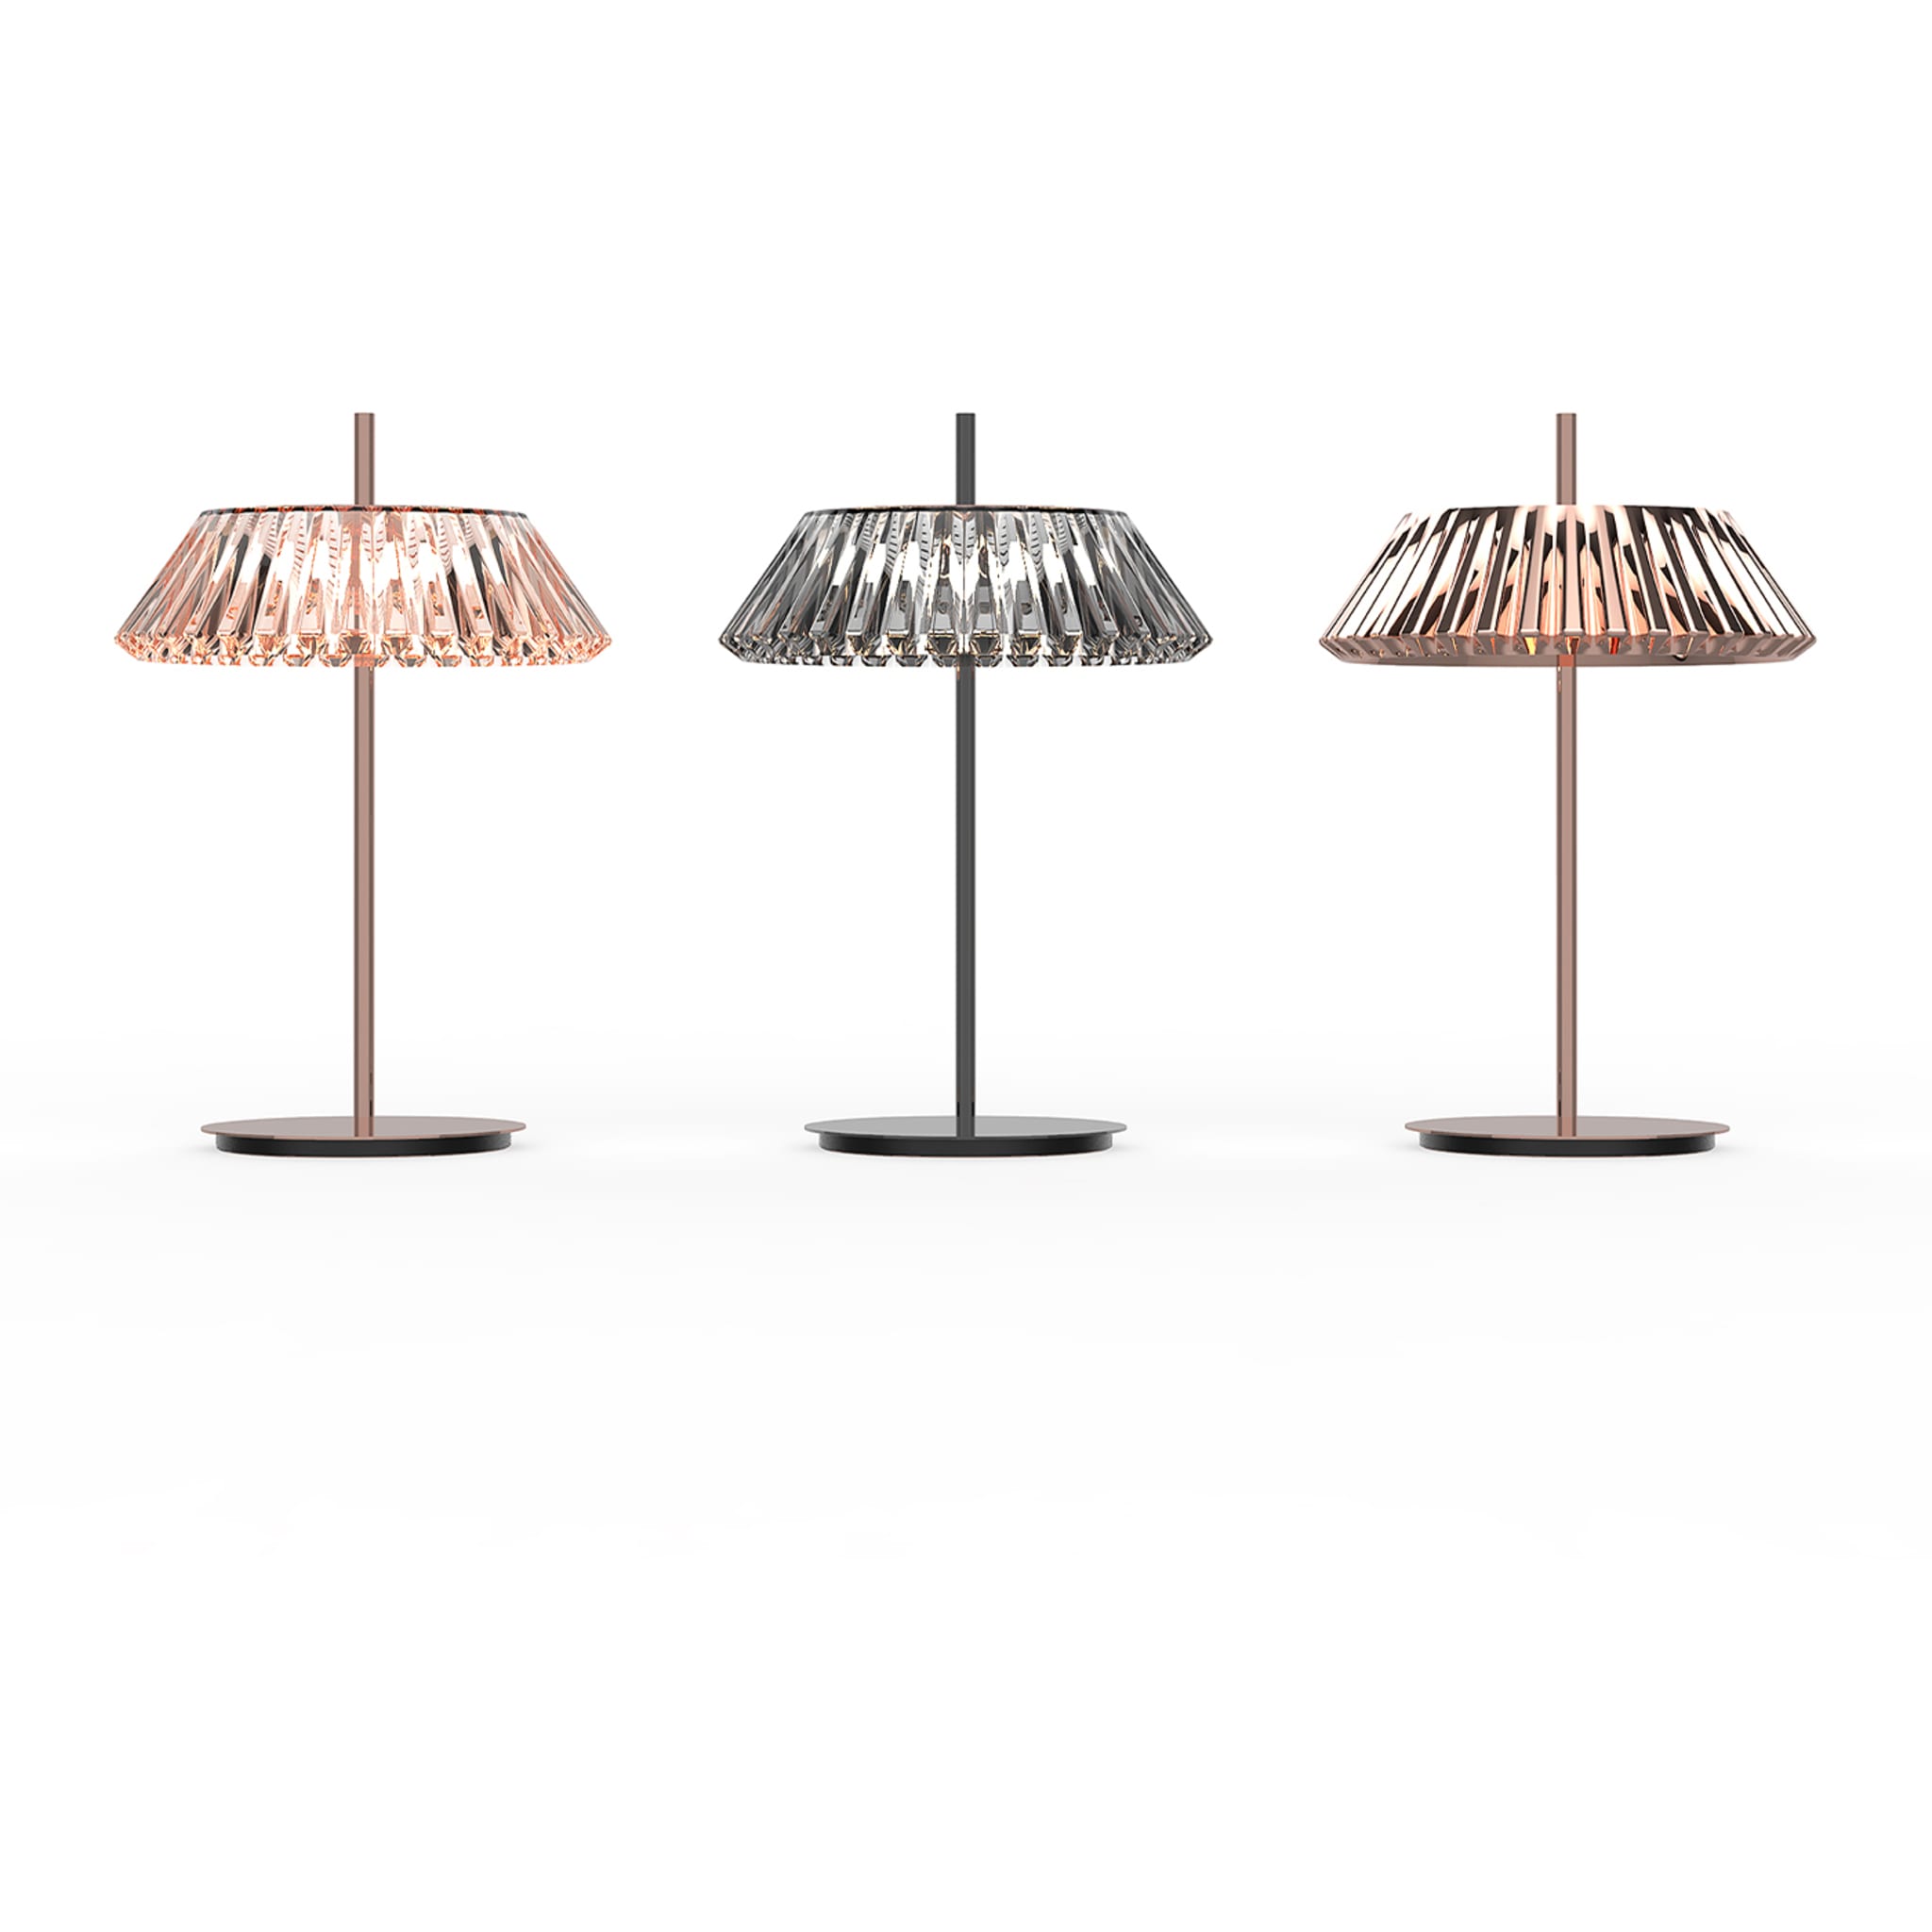 Chrome Nickel Table Lamp by MAM Design - Alternative view 1